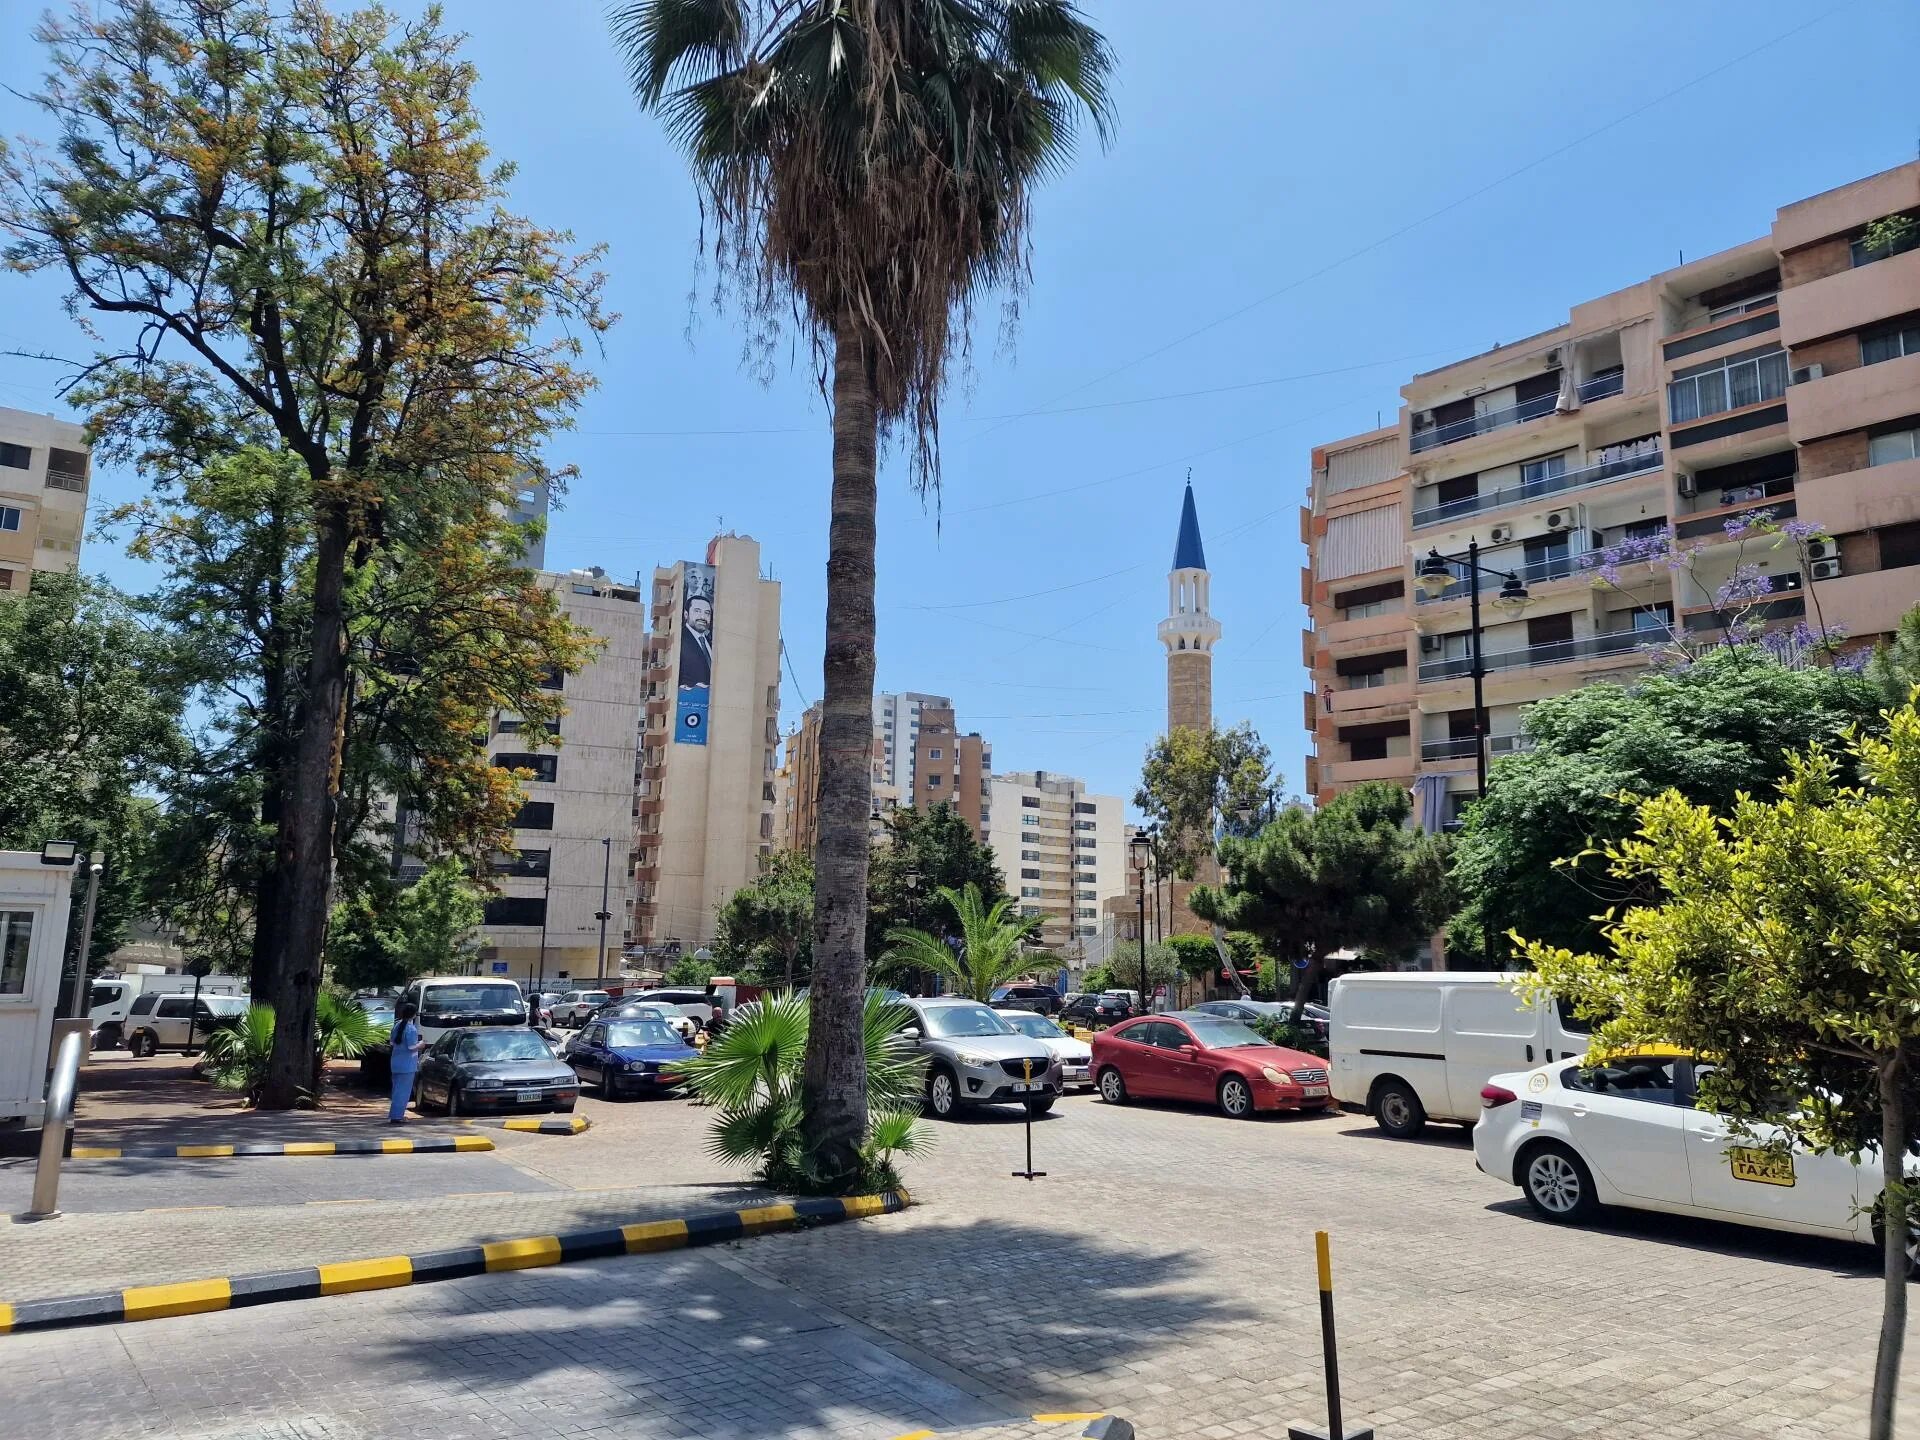 Бейруте какой город